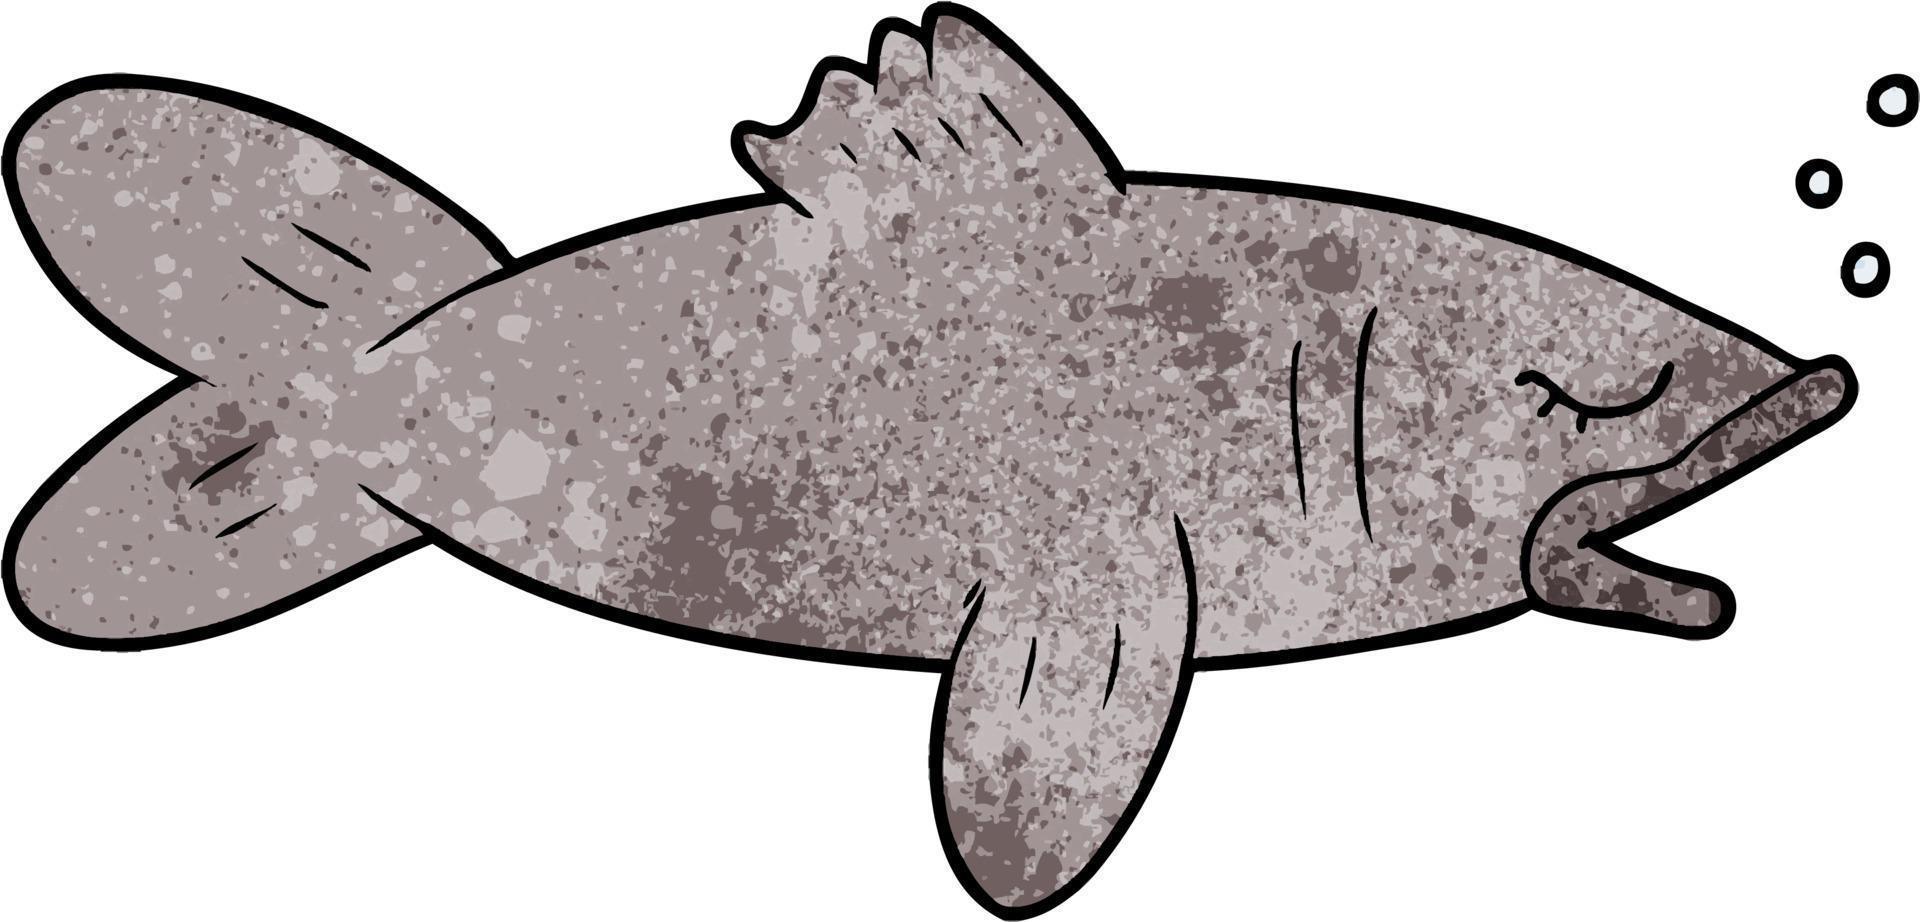 pez gris de dibujos animados vector